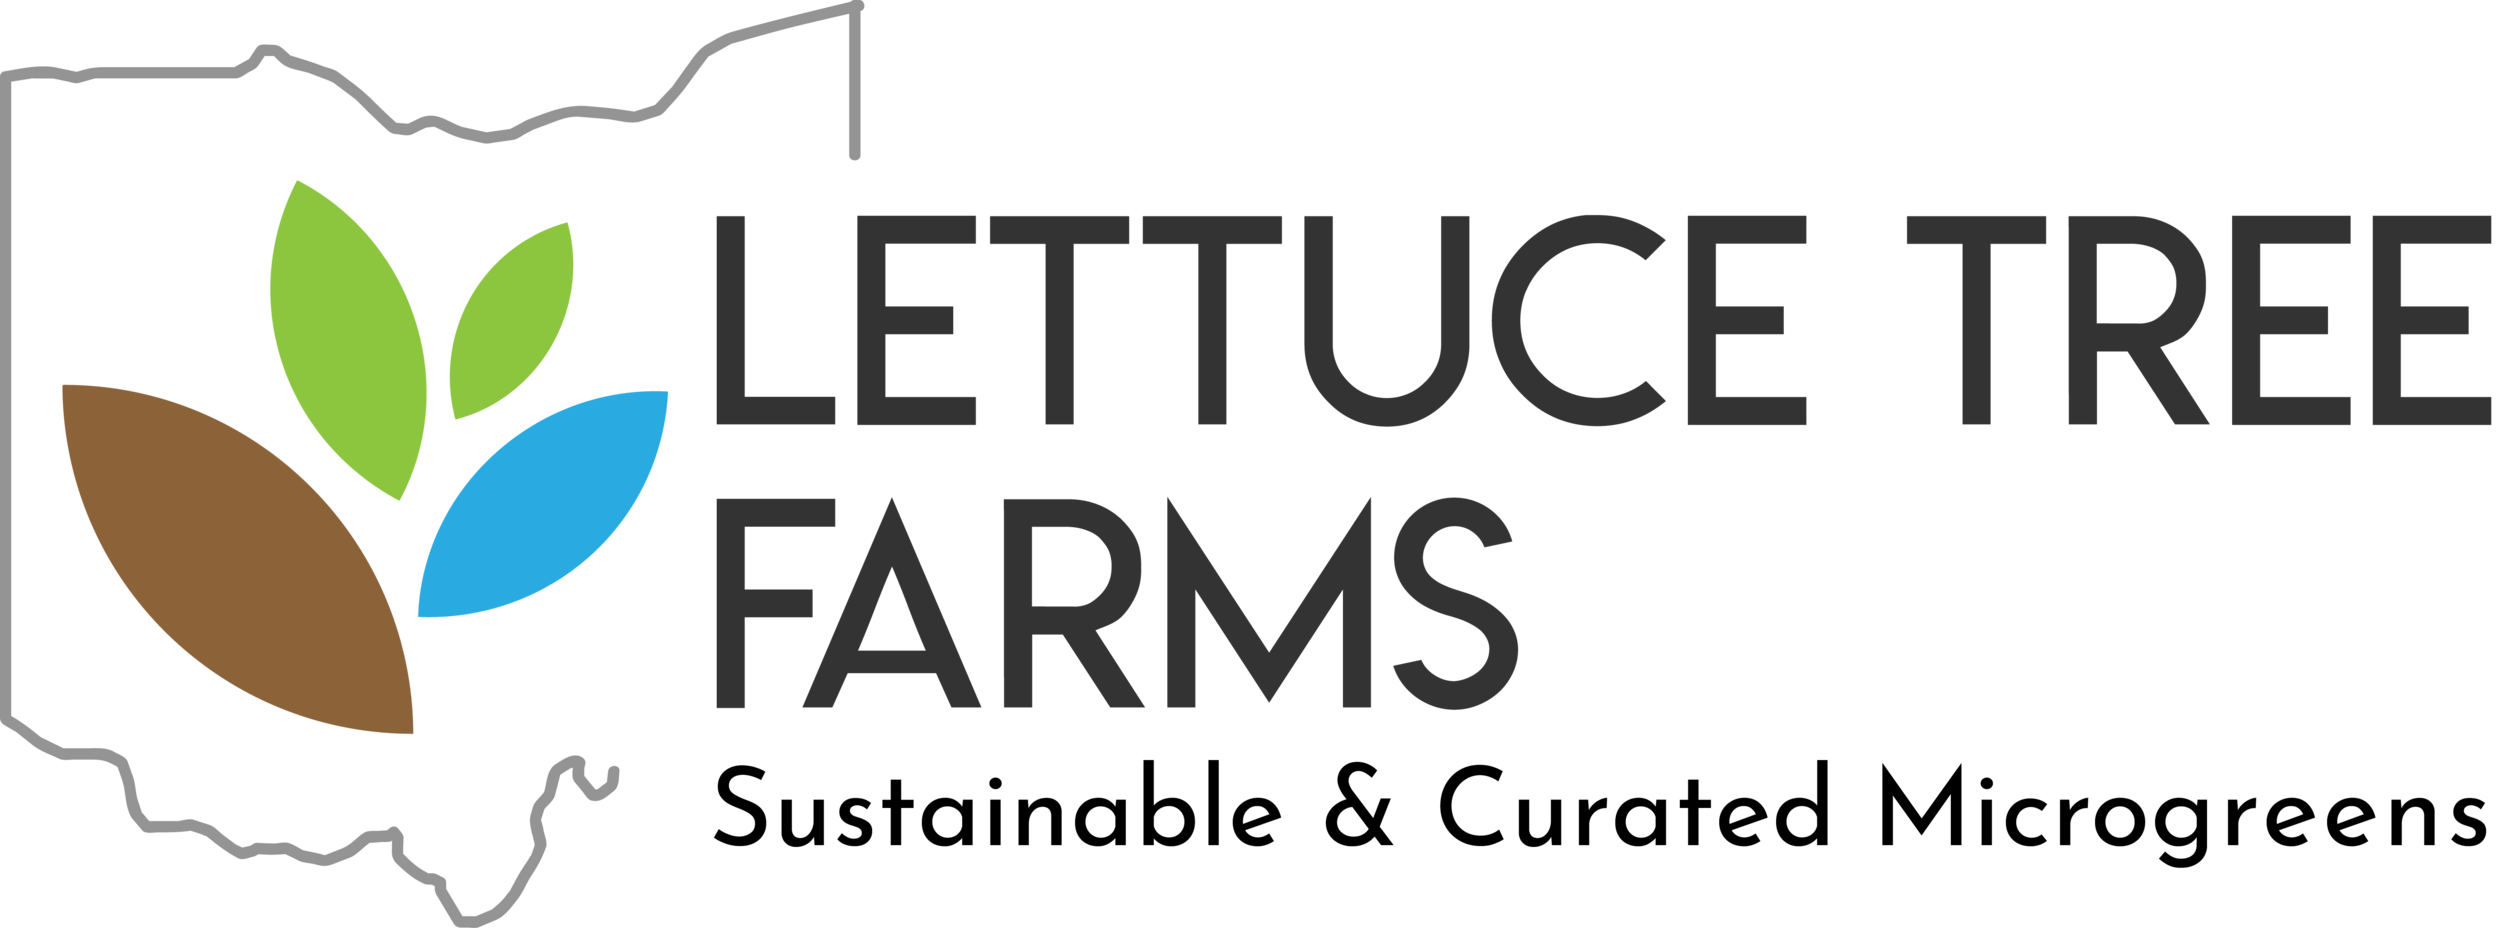 Lettuce Tree Farms